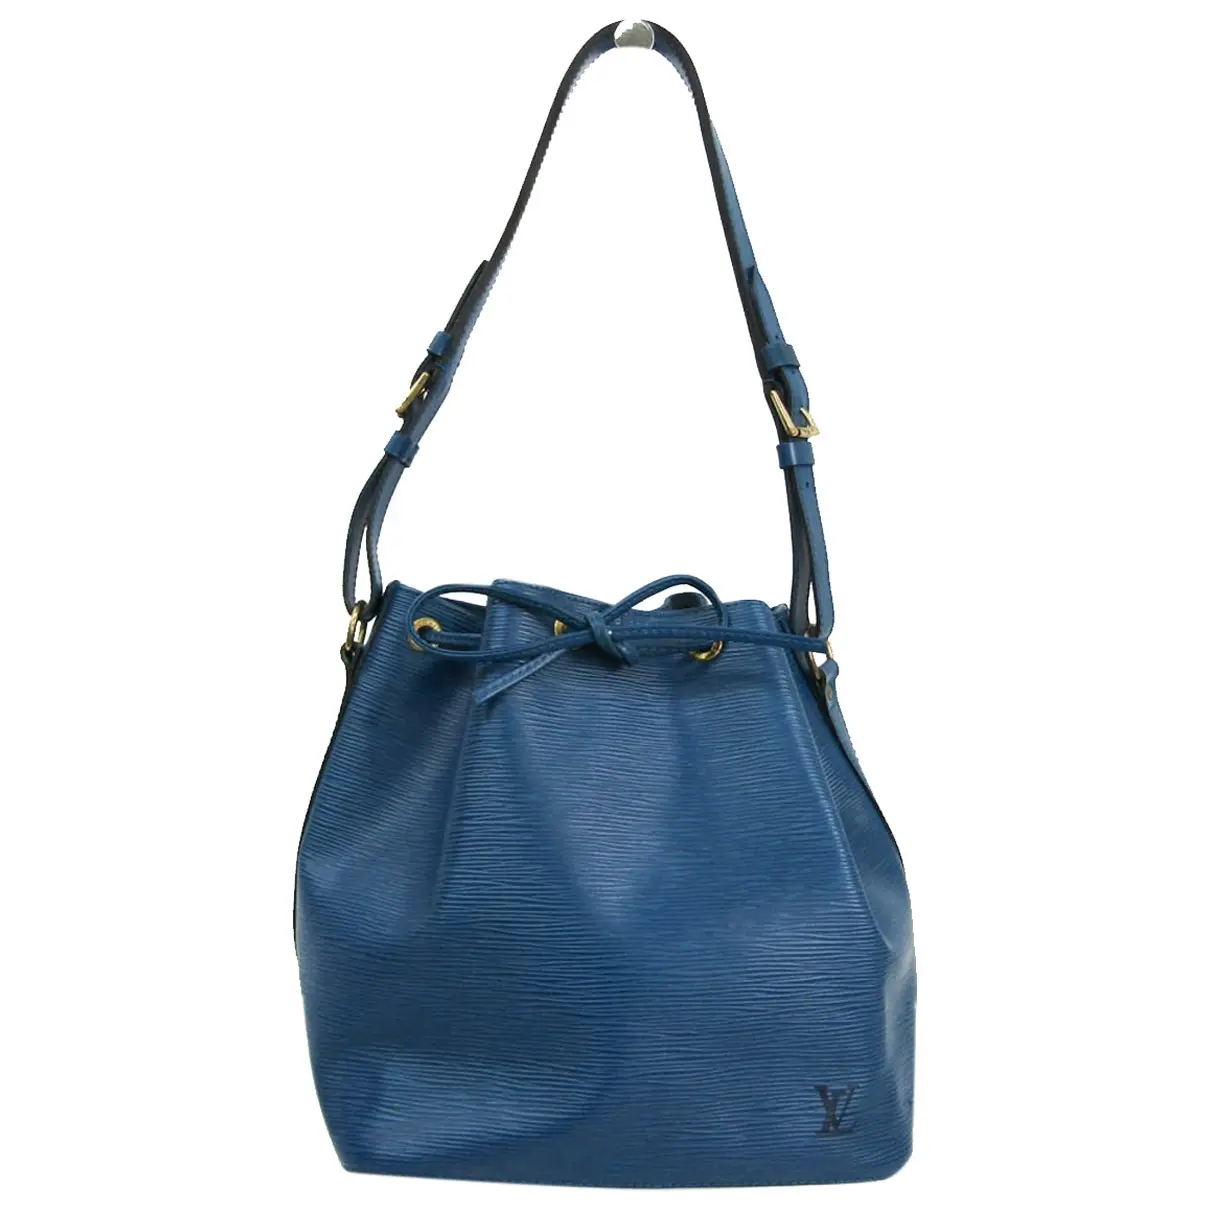 Noe leather handbag Louis Vuitton